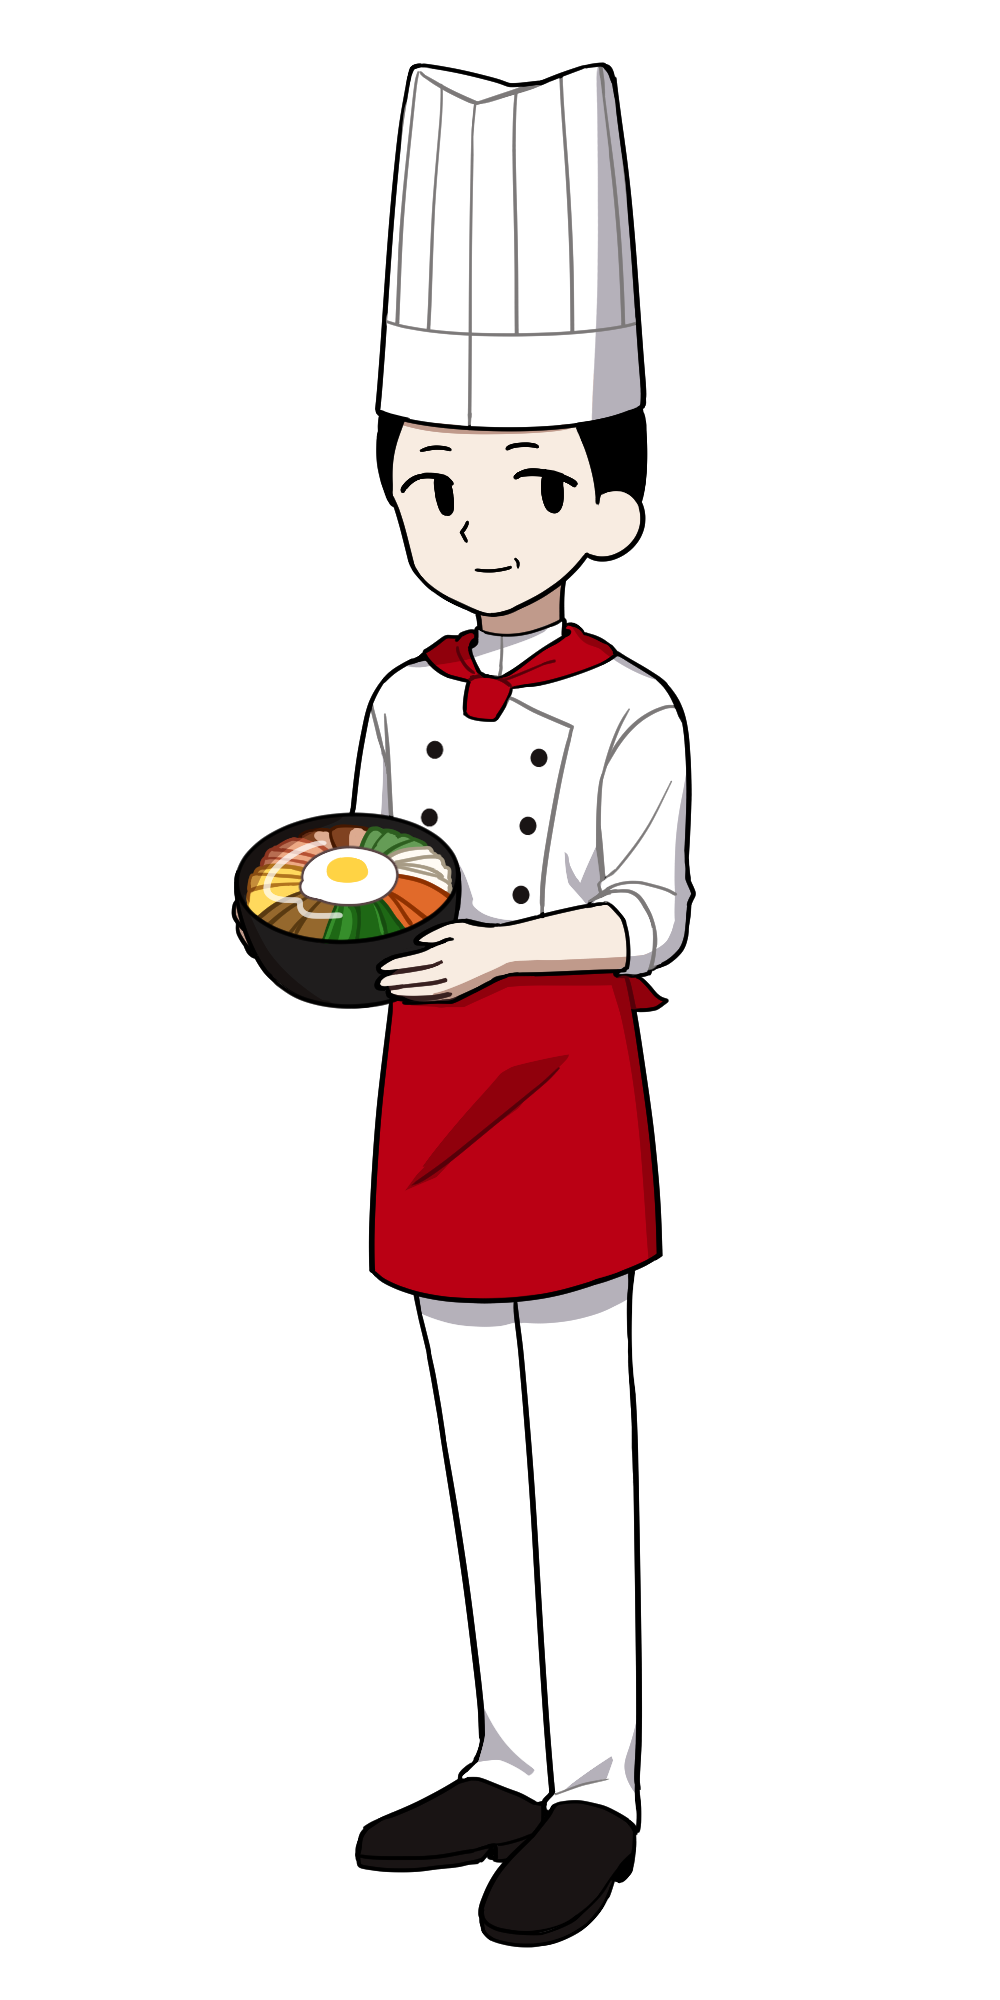 Chef character with bibimbap